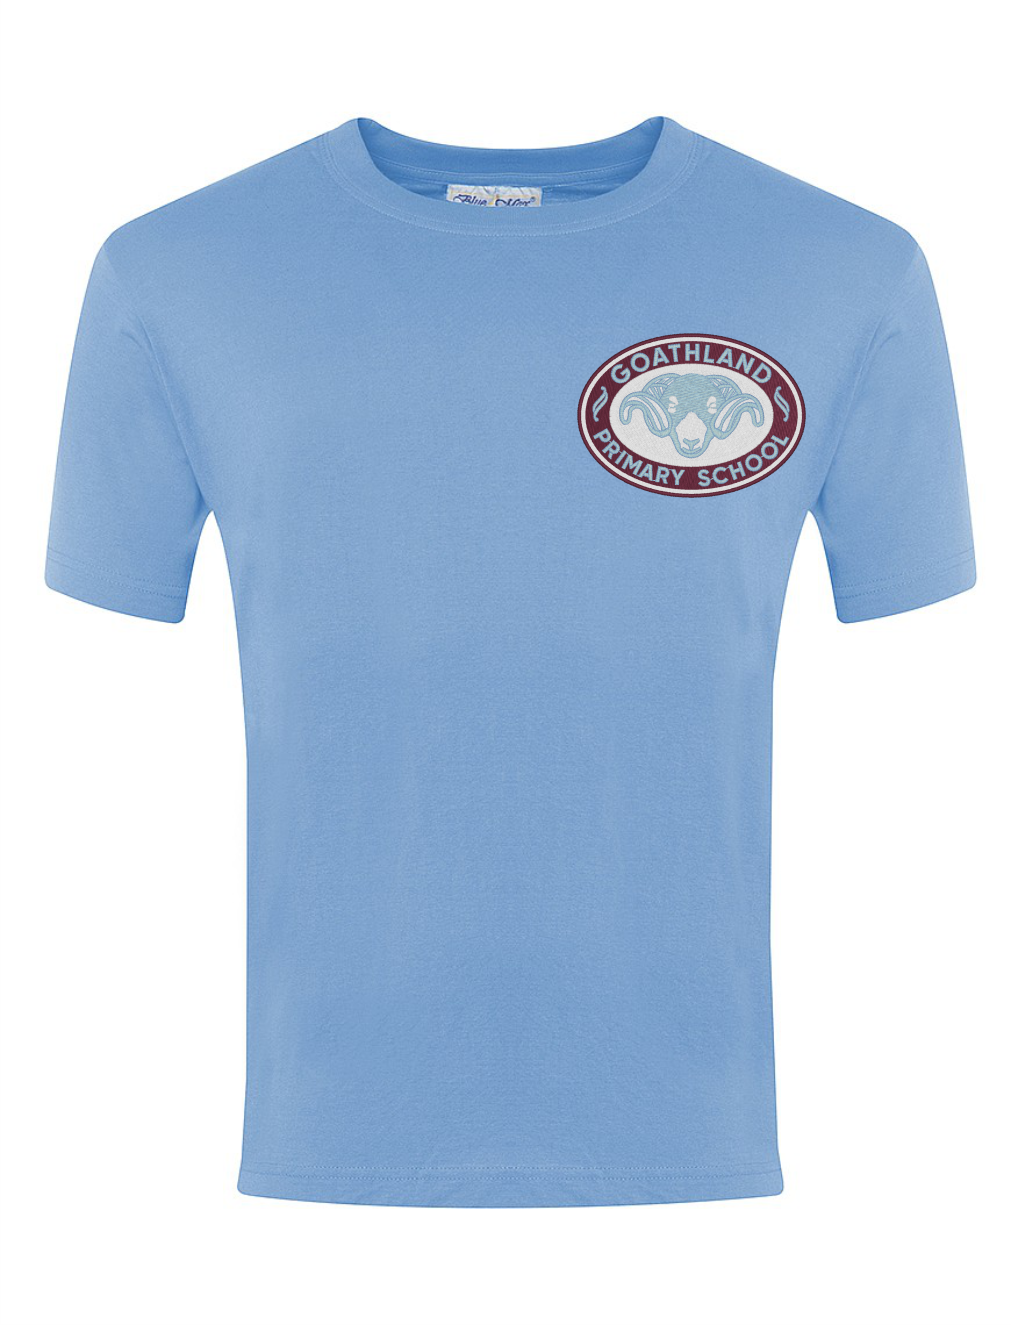 Goathland Sky PE T-Shirt